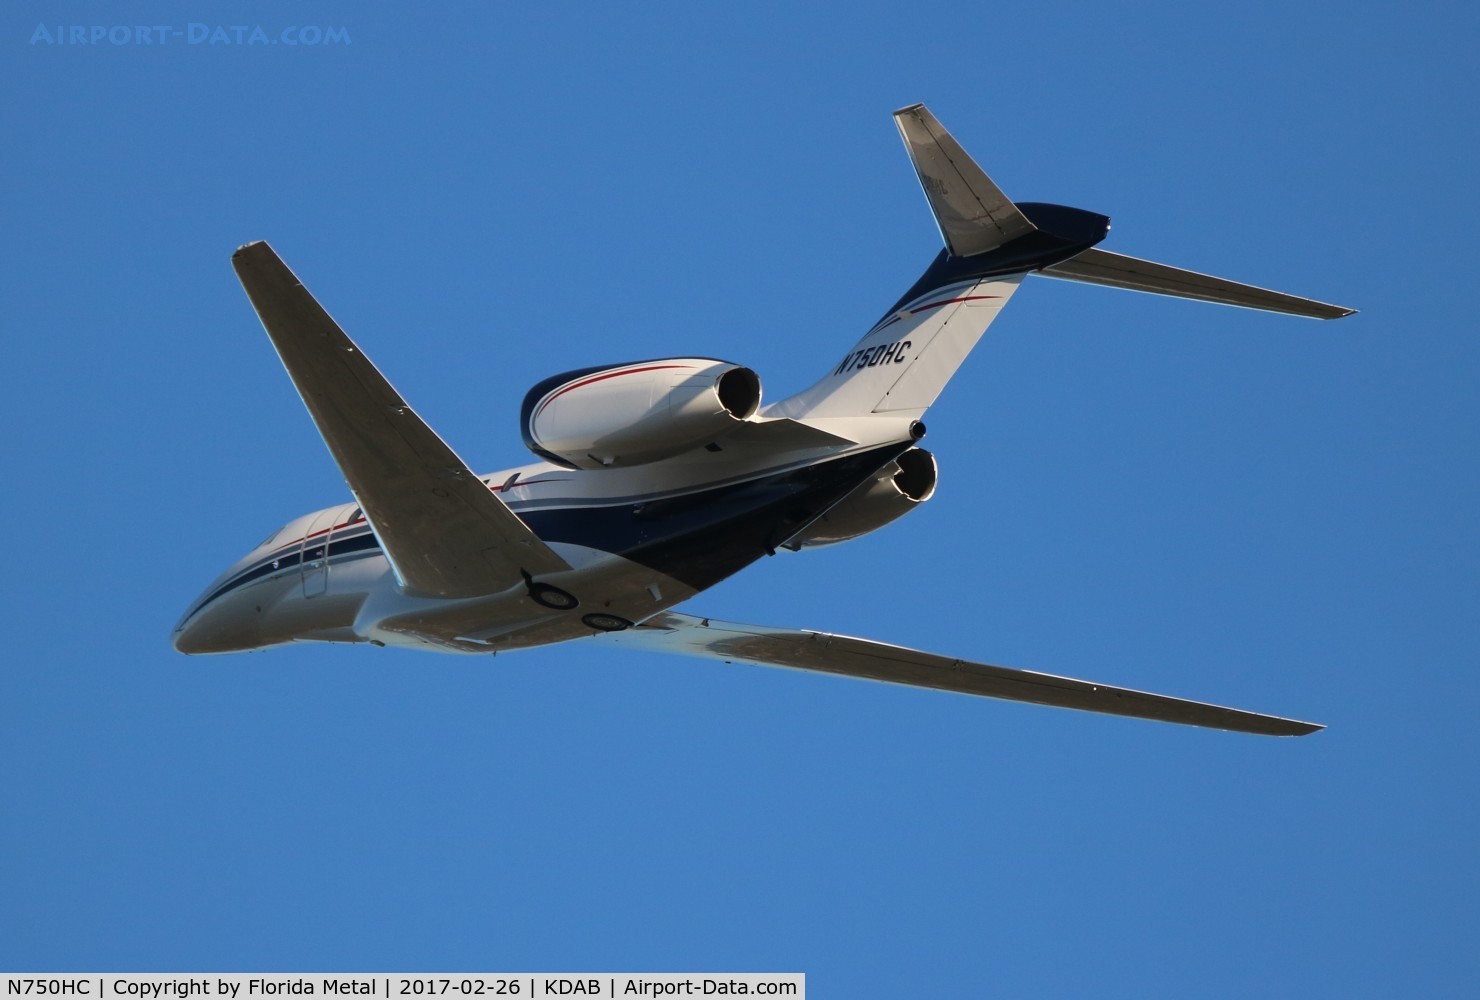 N750HC, 2002 Cessna 750 Citation X Citation X C/N 750-0185, DAB spotting 2017